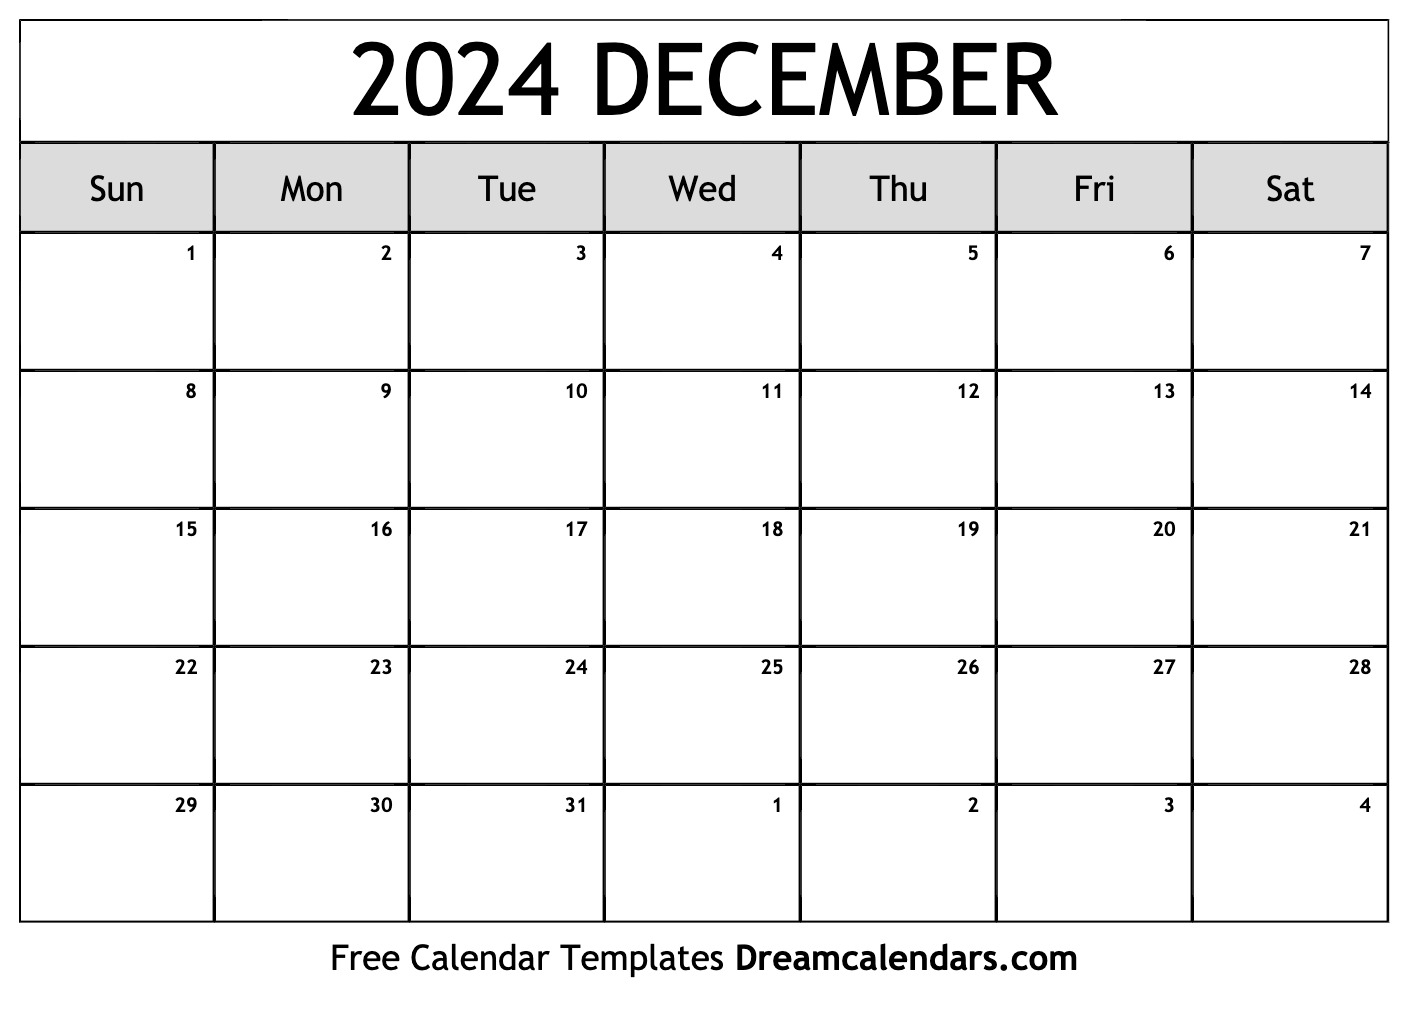 December 2024 Calendar | Free Blank Printable With Holidays for Free Printable Calendar 2024 December